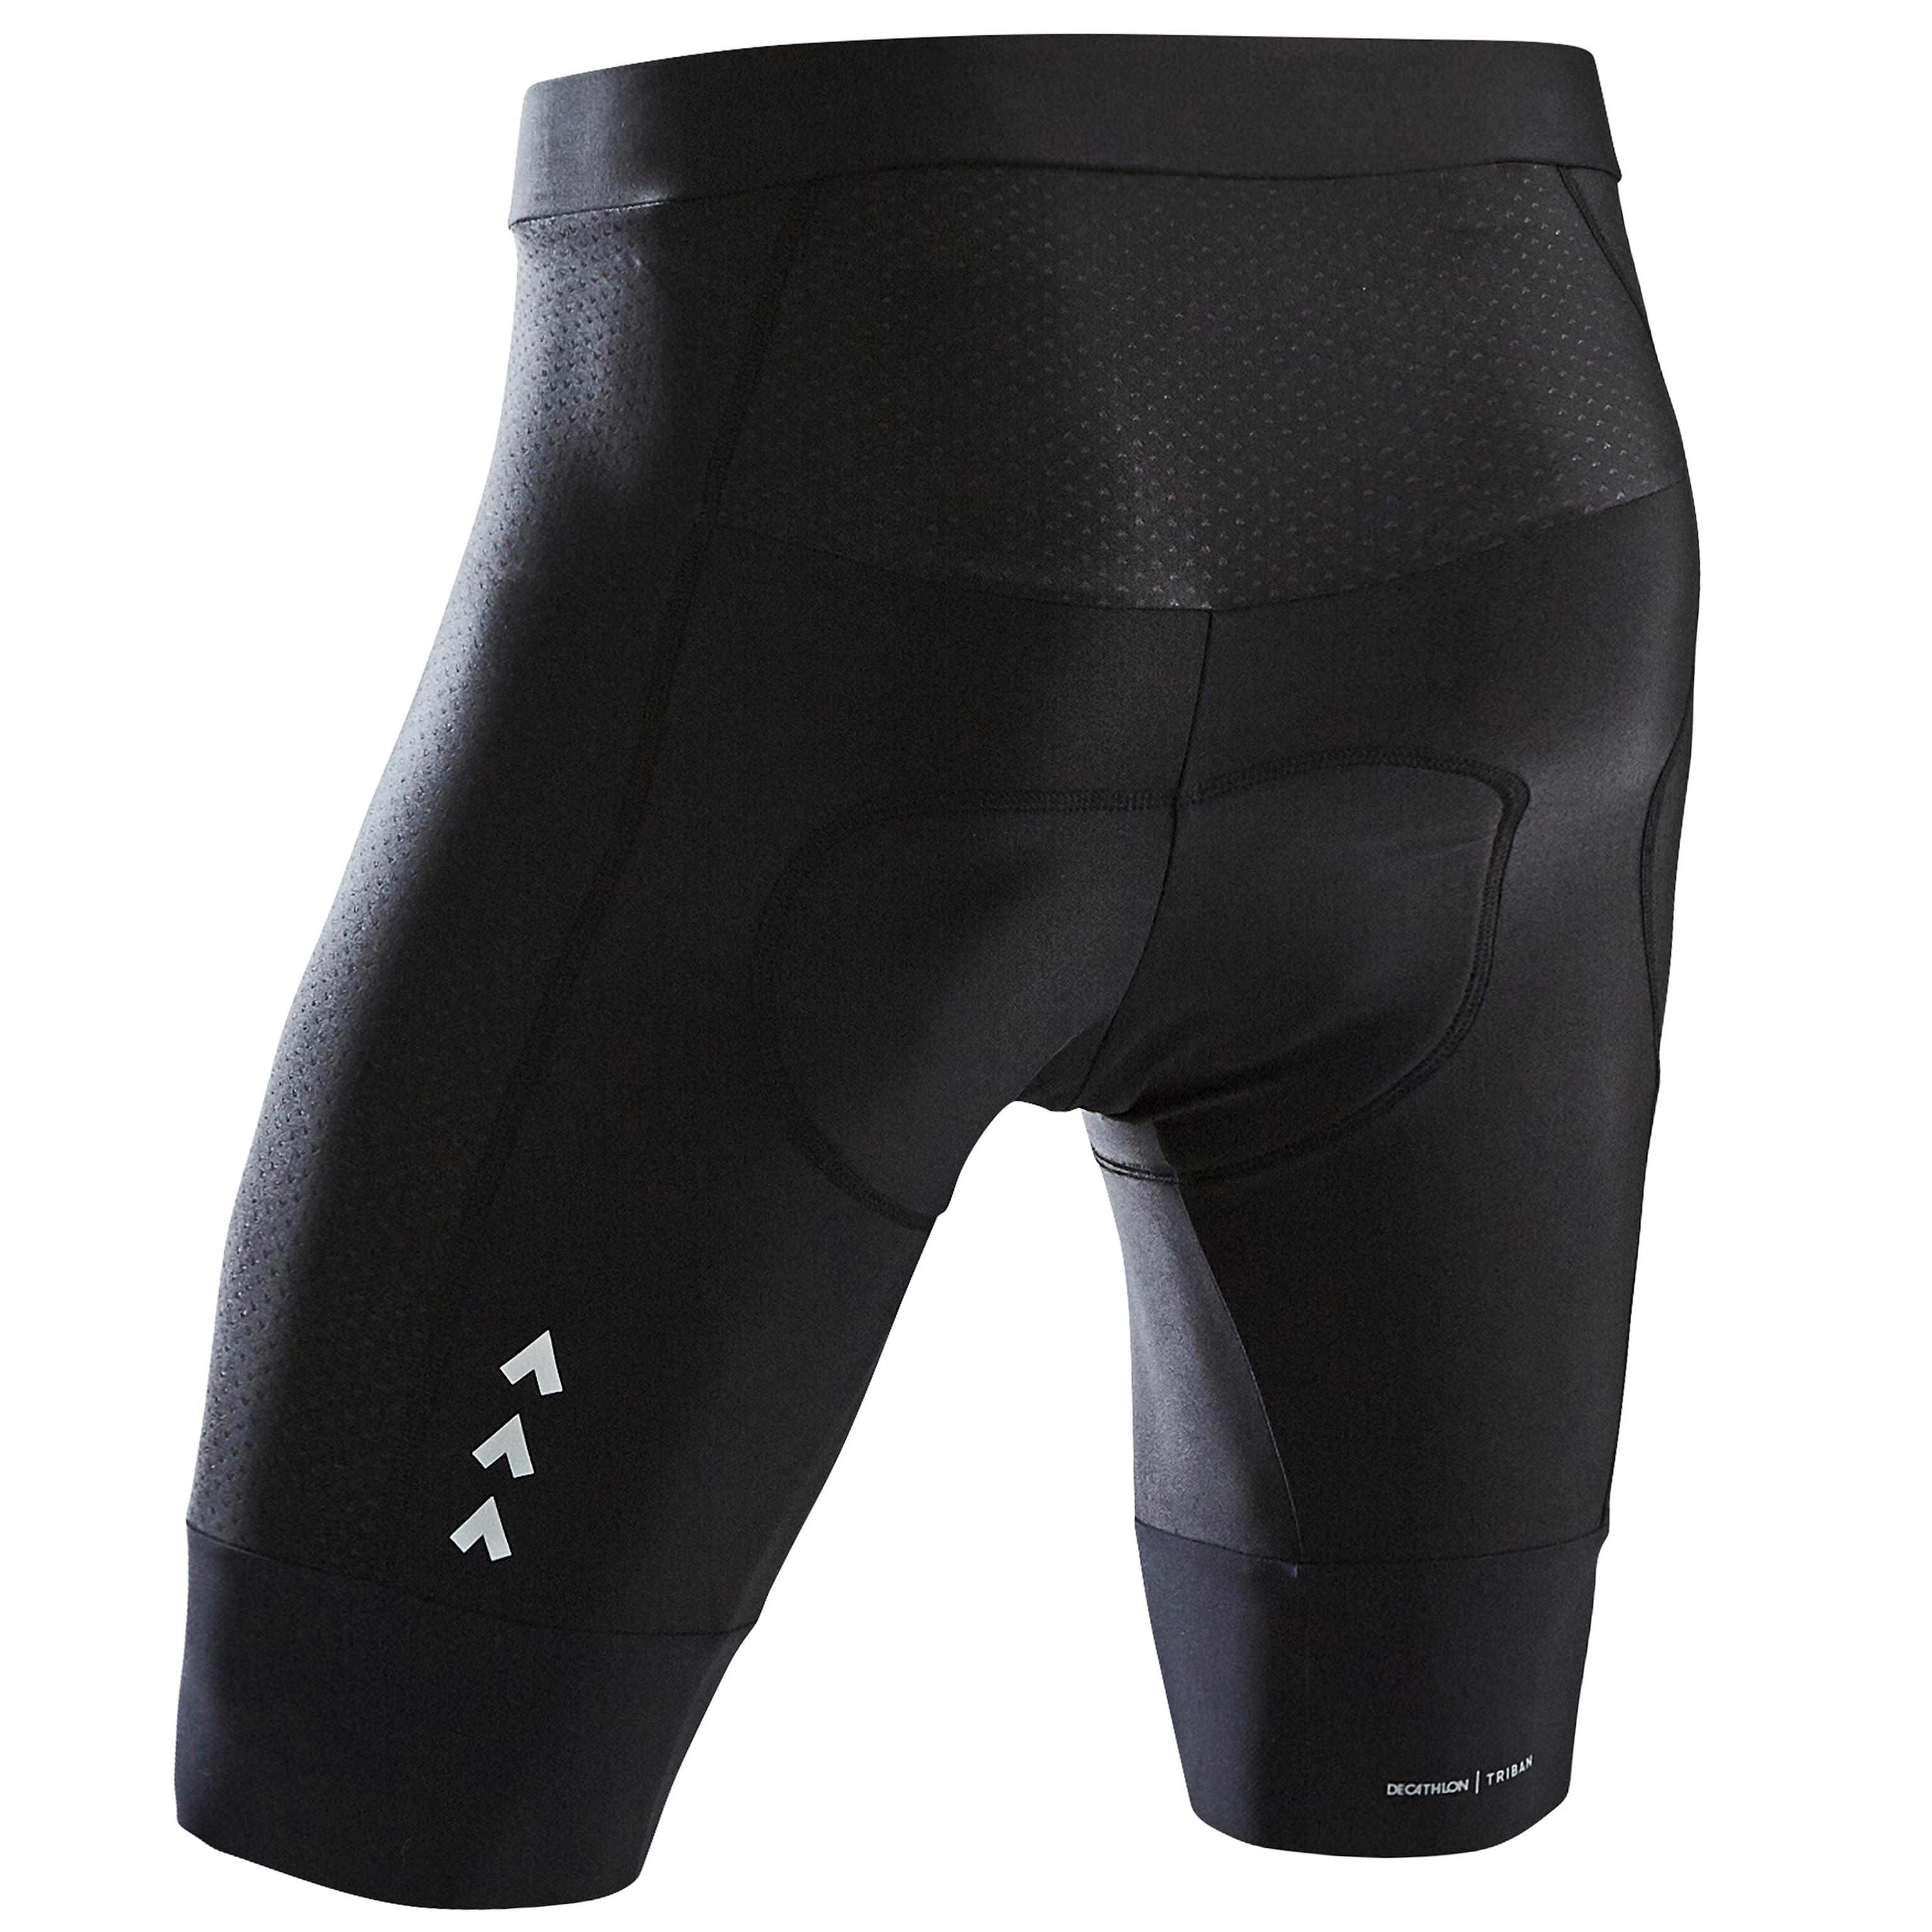 cycling shorts with pocket